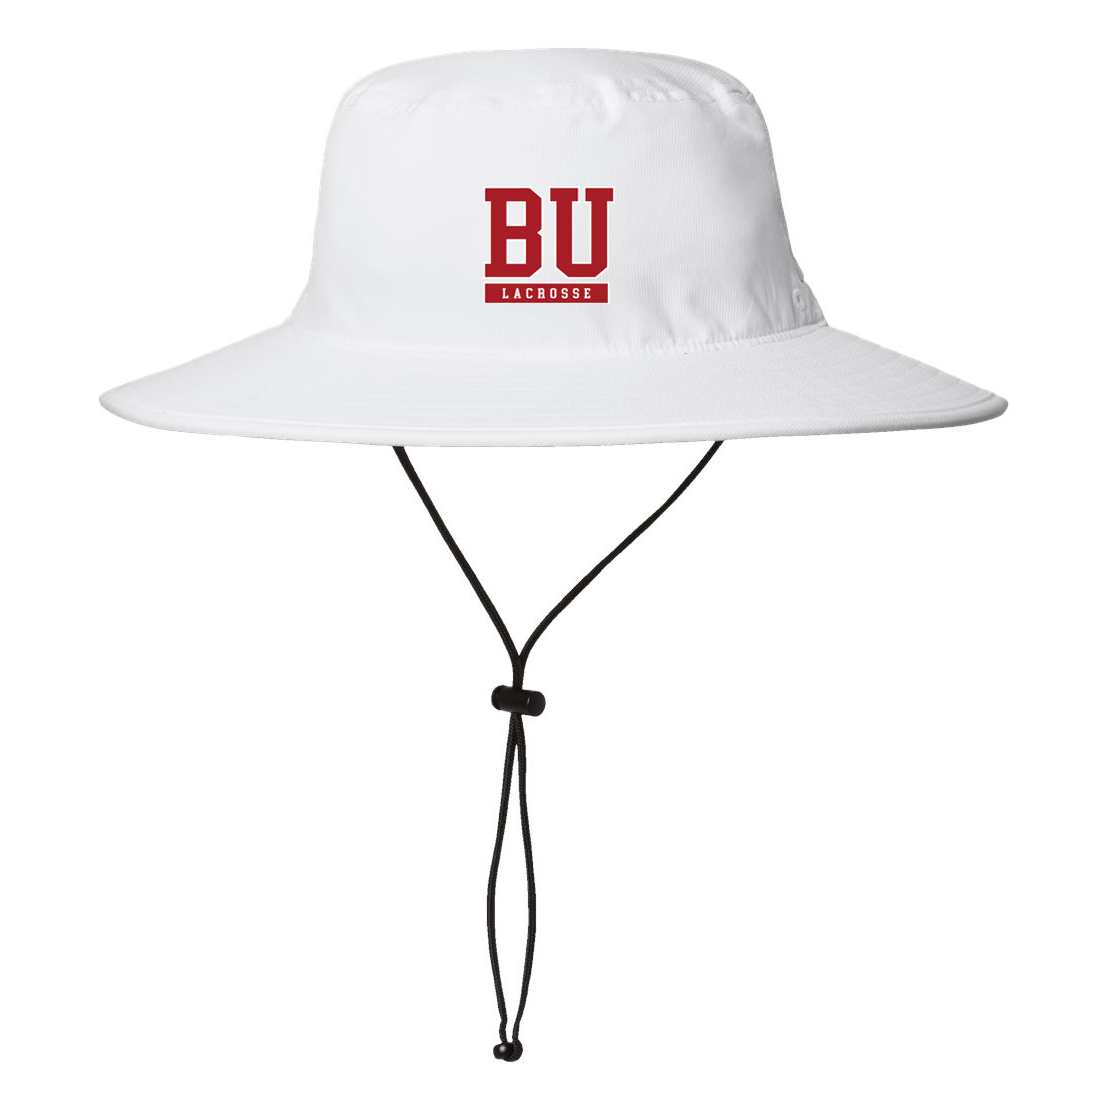 Boston University Lacrosse Adidas Sustainable Sun Hat